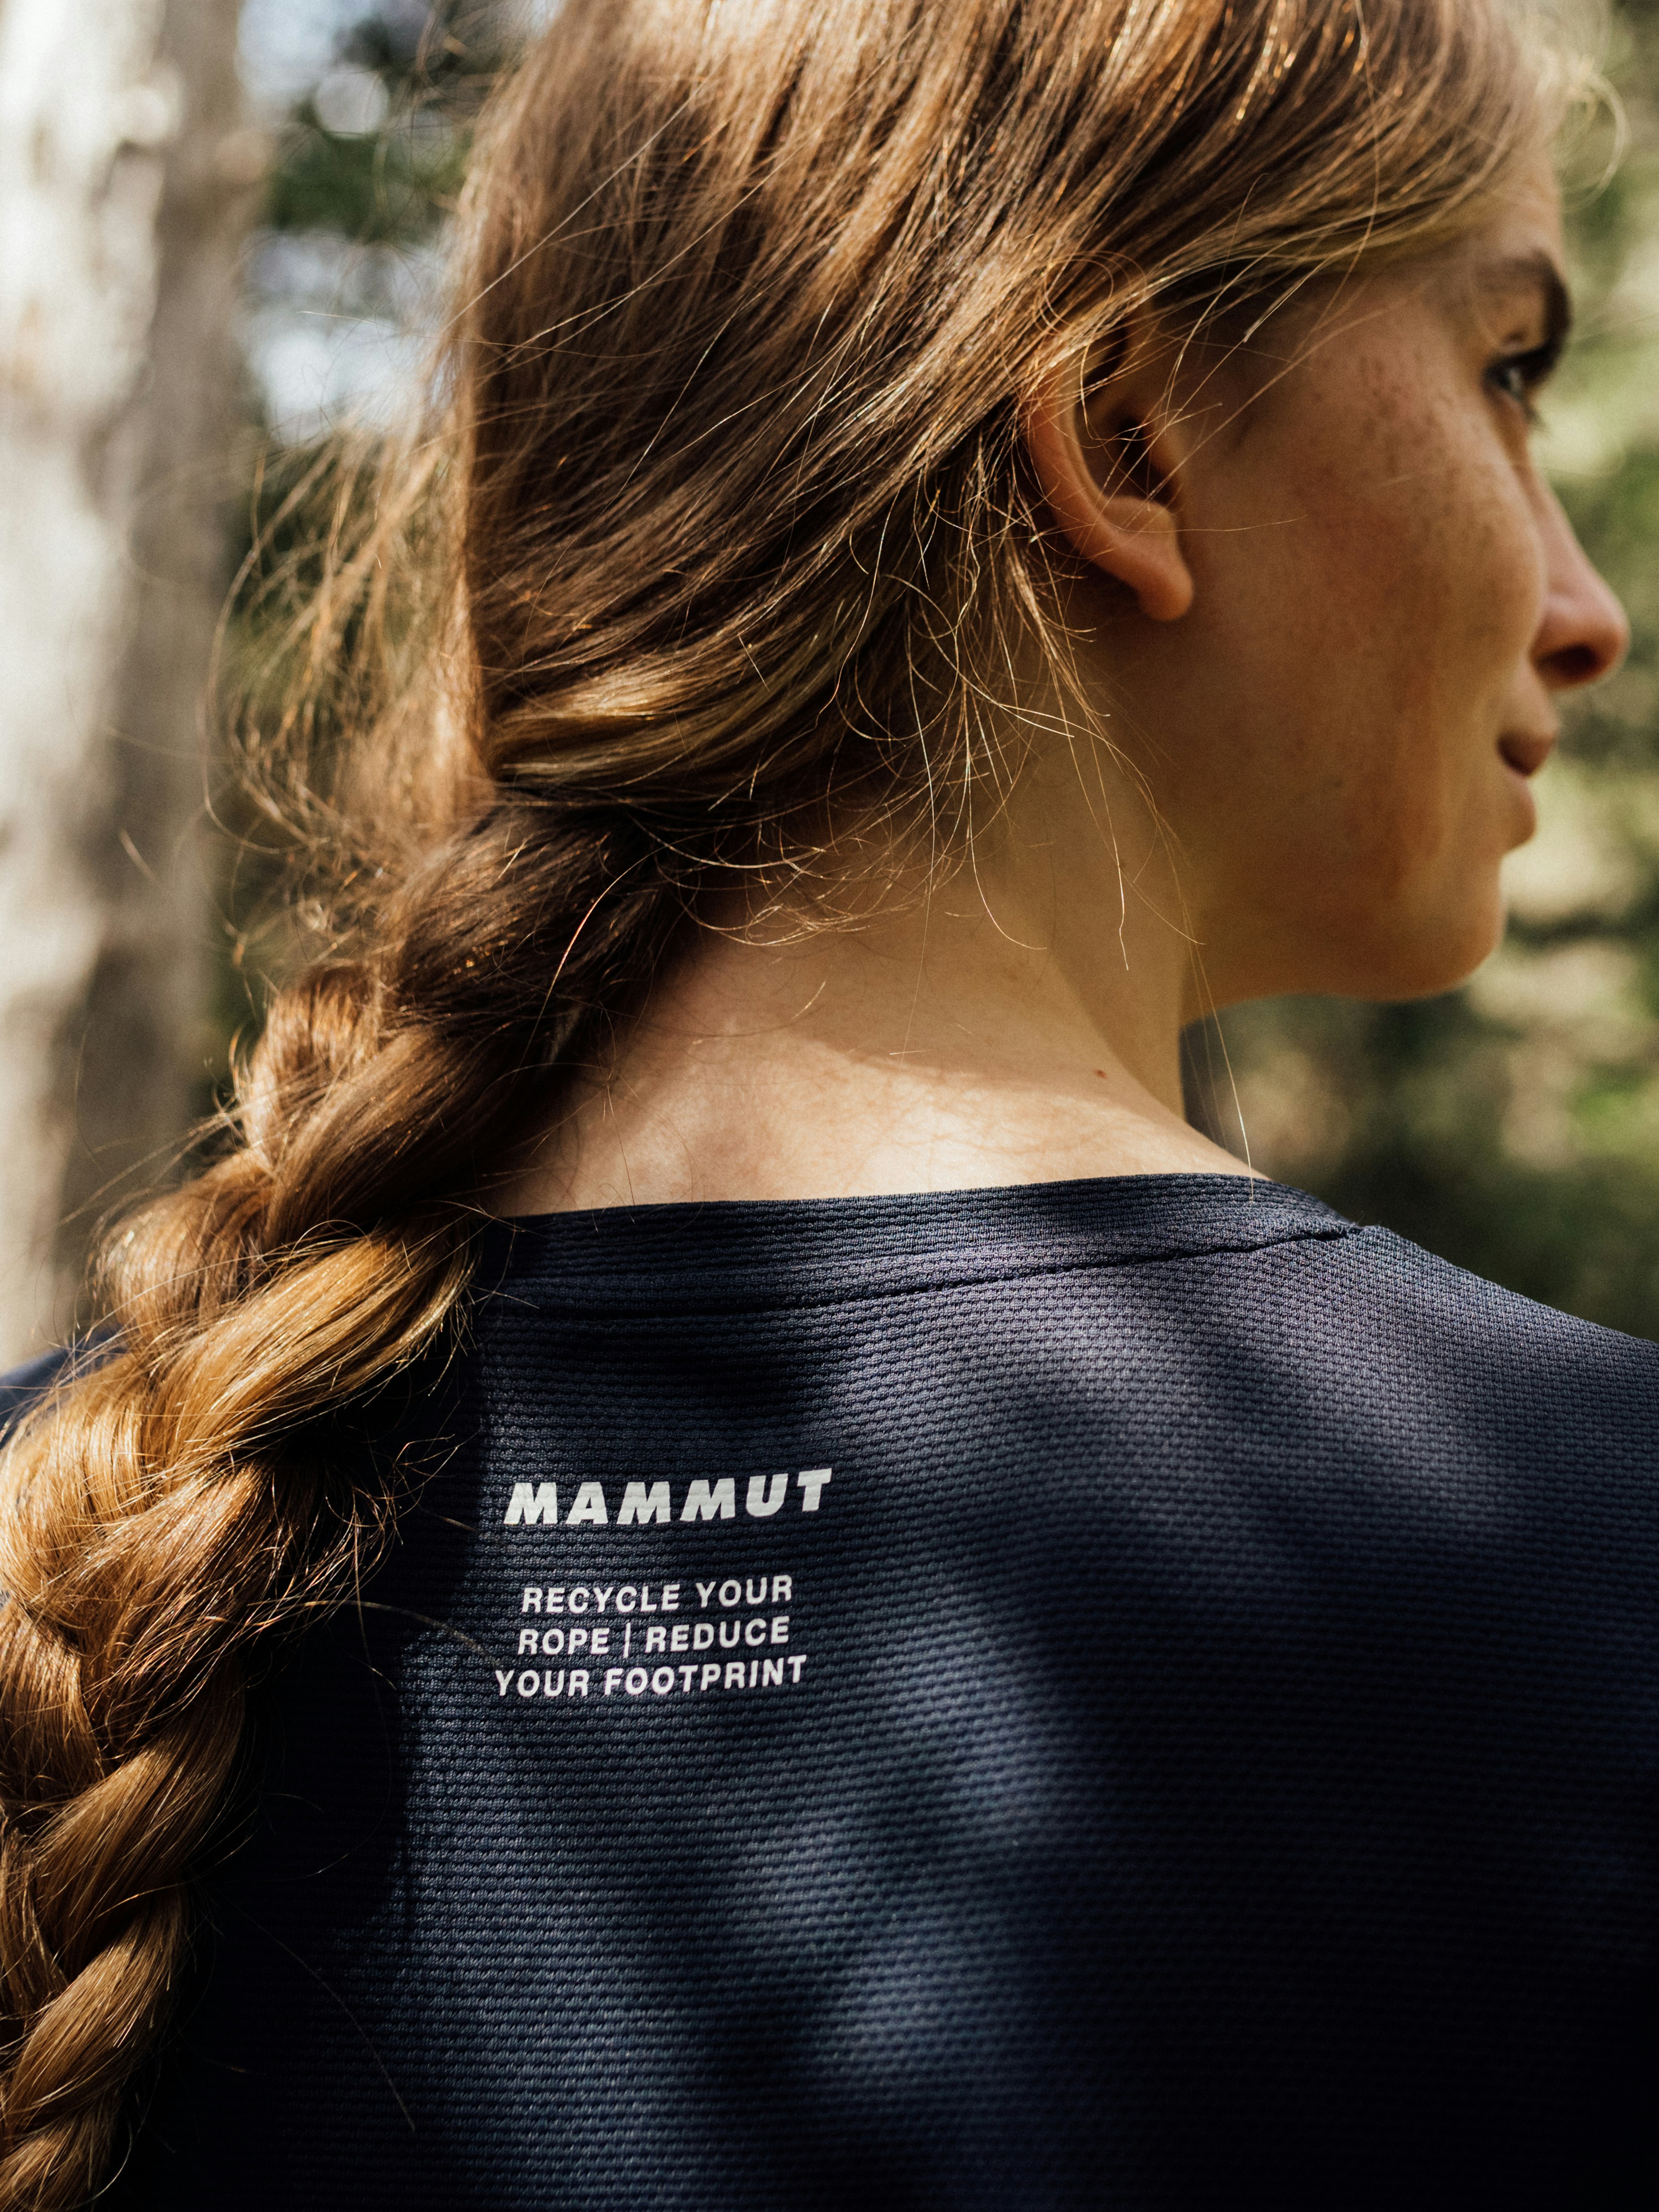 Woman in Mammut t-shirt.